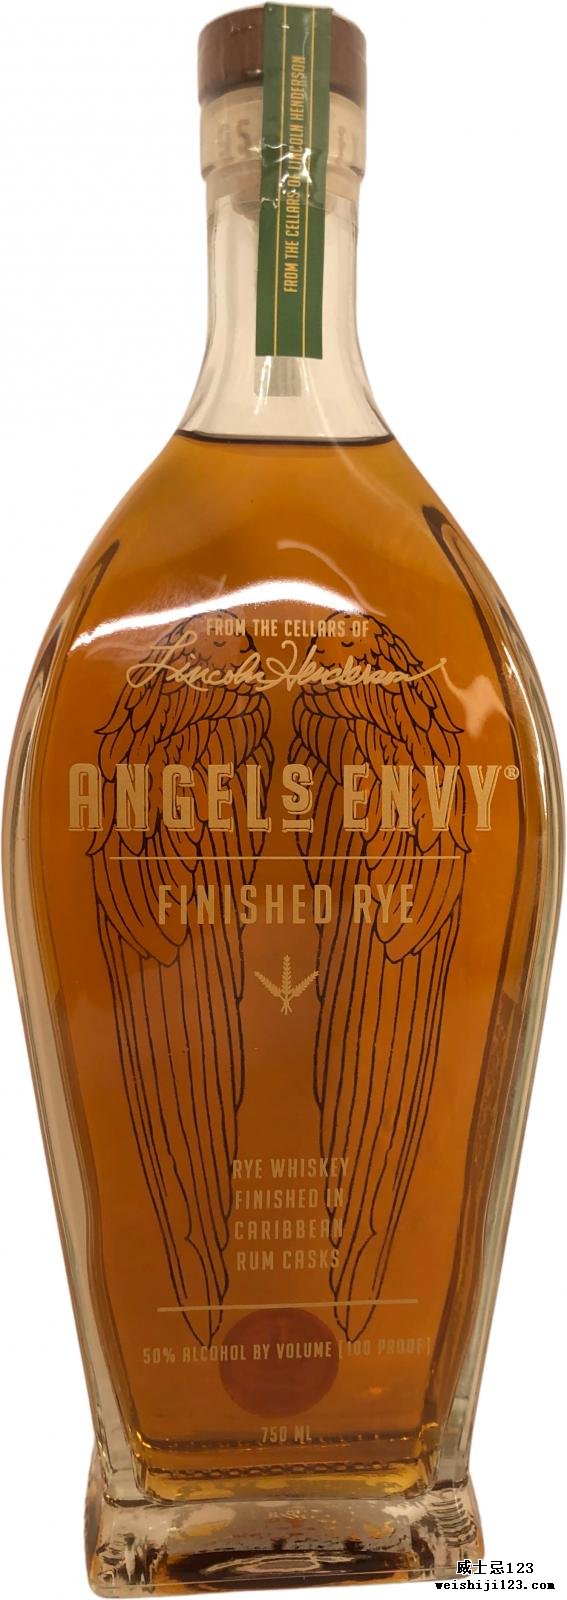 Angel's Envy Carribean Rum Casks Finished